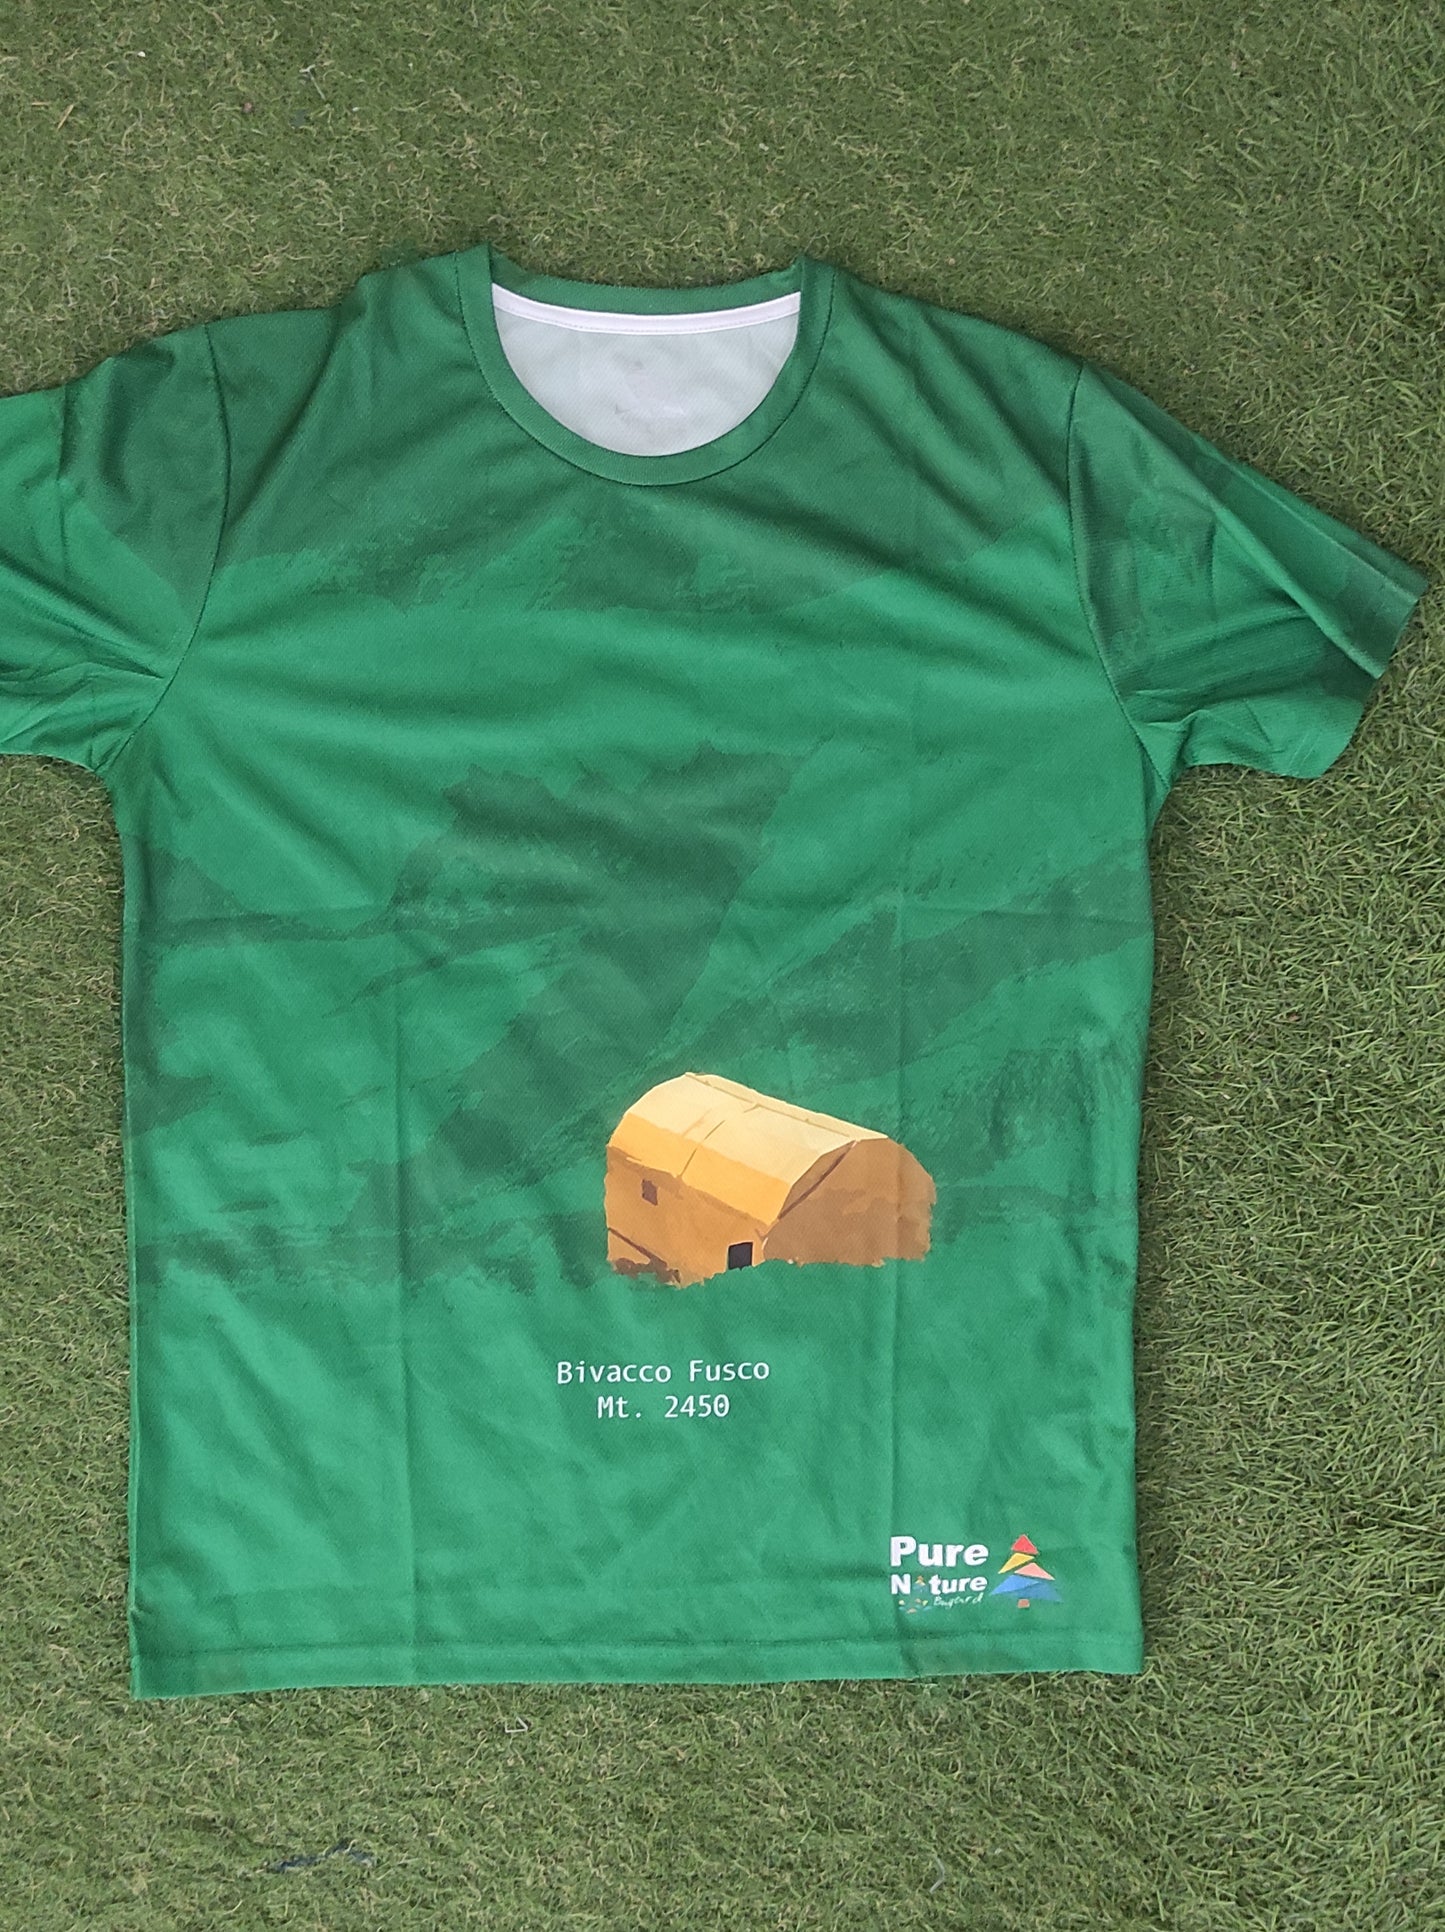 Pure Nature Project shirt Bivacco Fusco